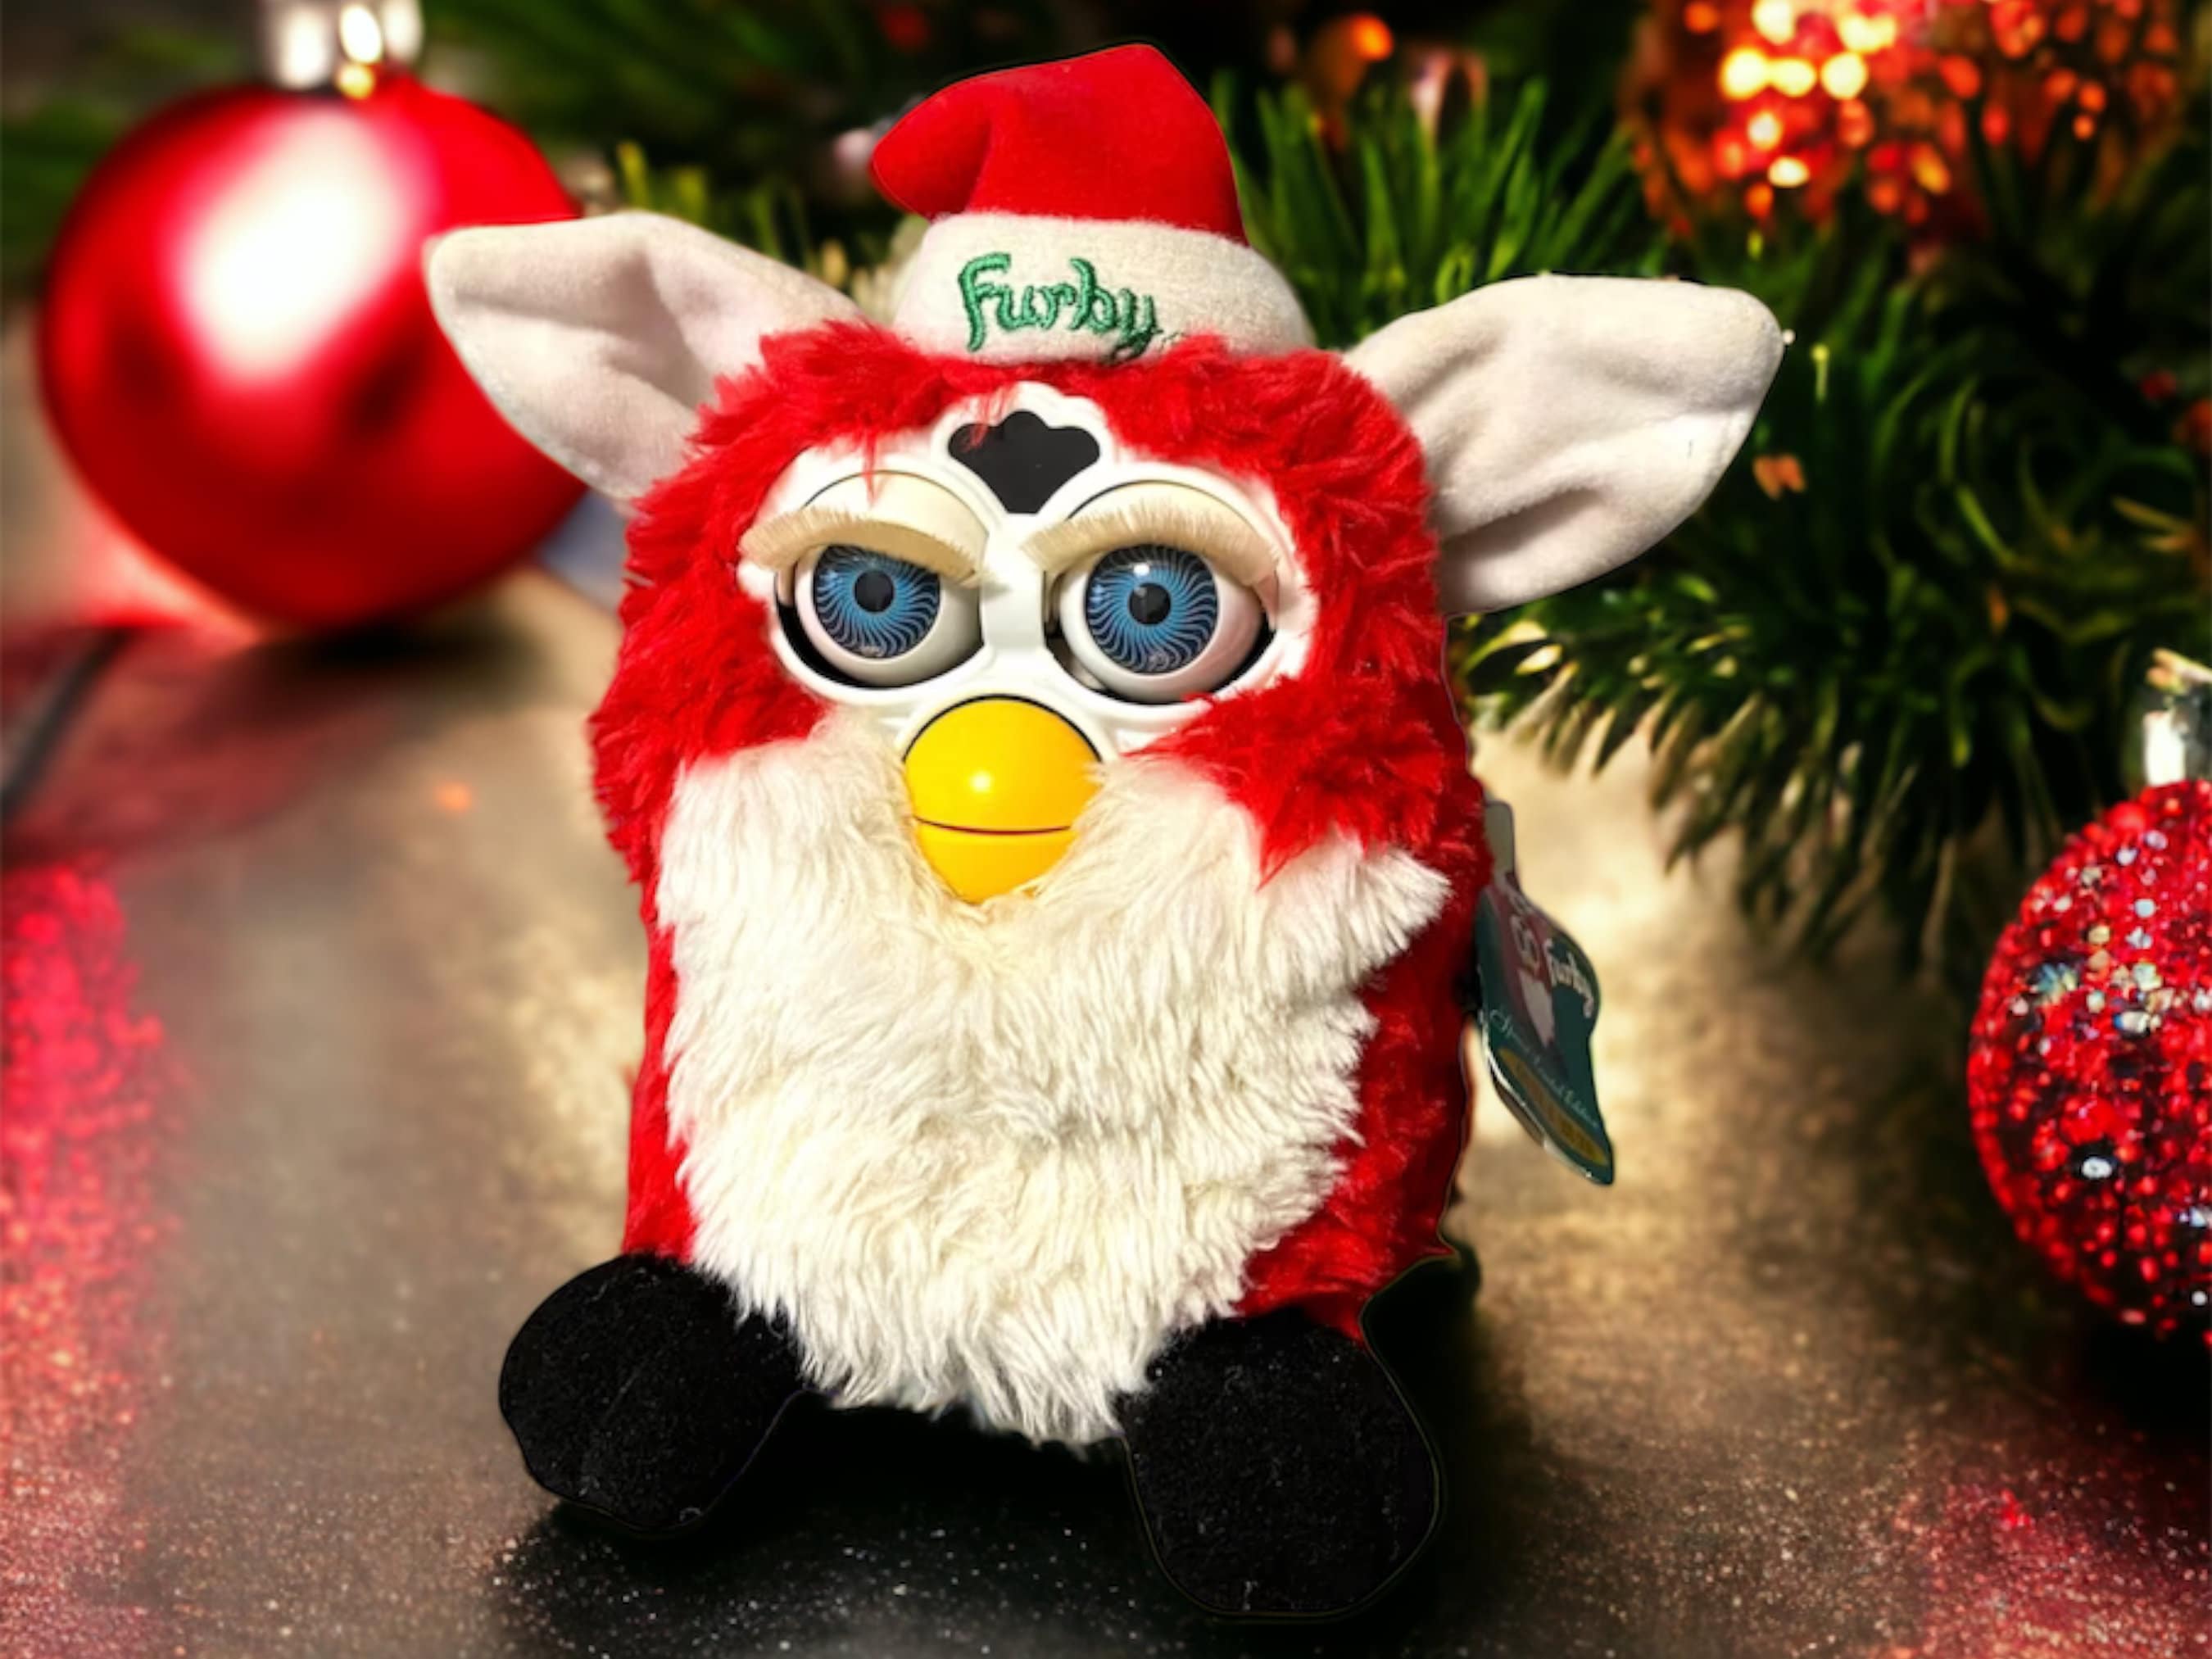 Peluche Furby moins chère pour Noël (dès 29,90€)